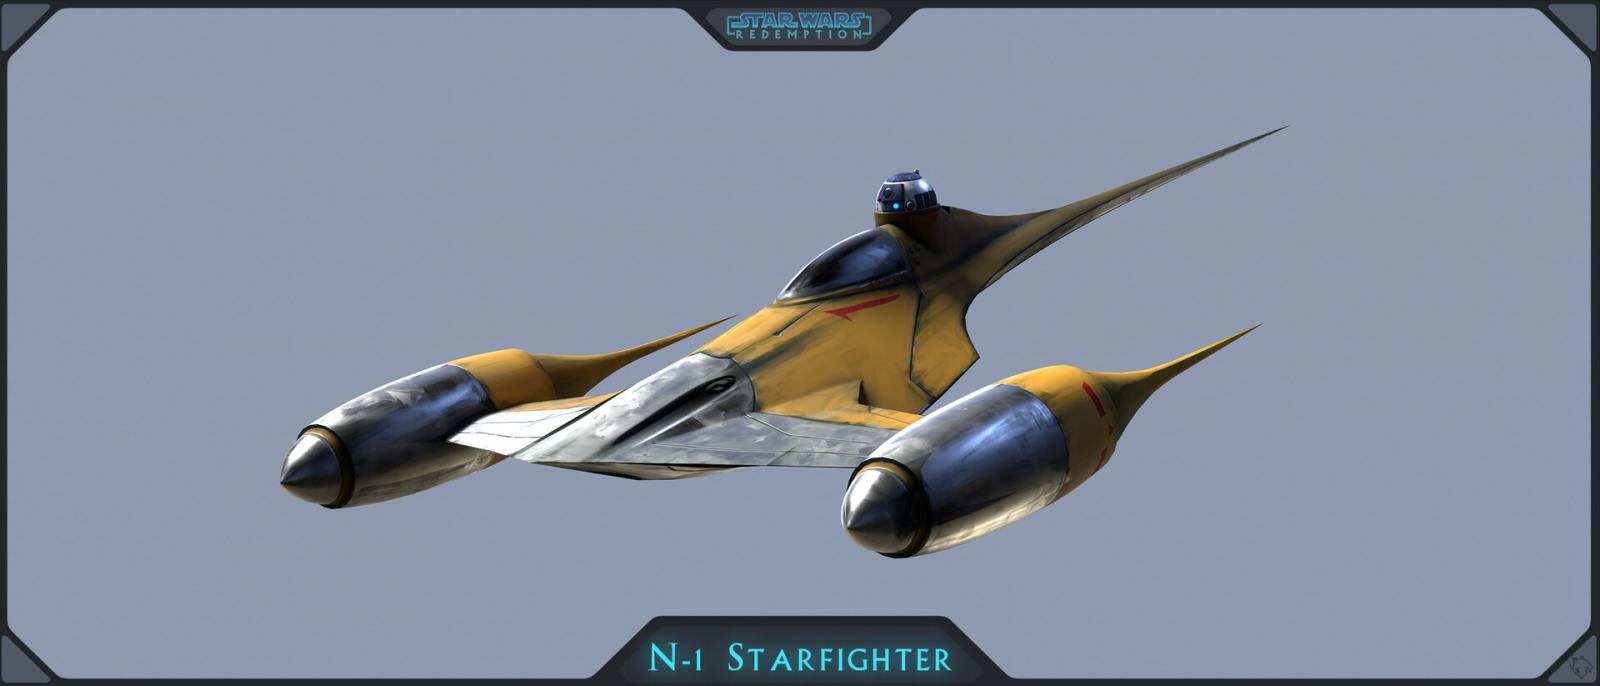 etienne-beschet-rd-prp-starfighter-n-1-07.jpg